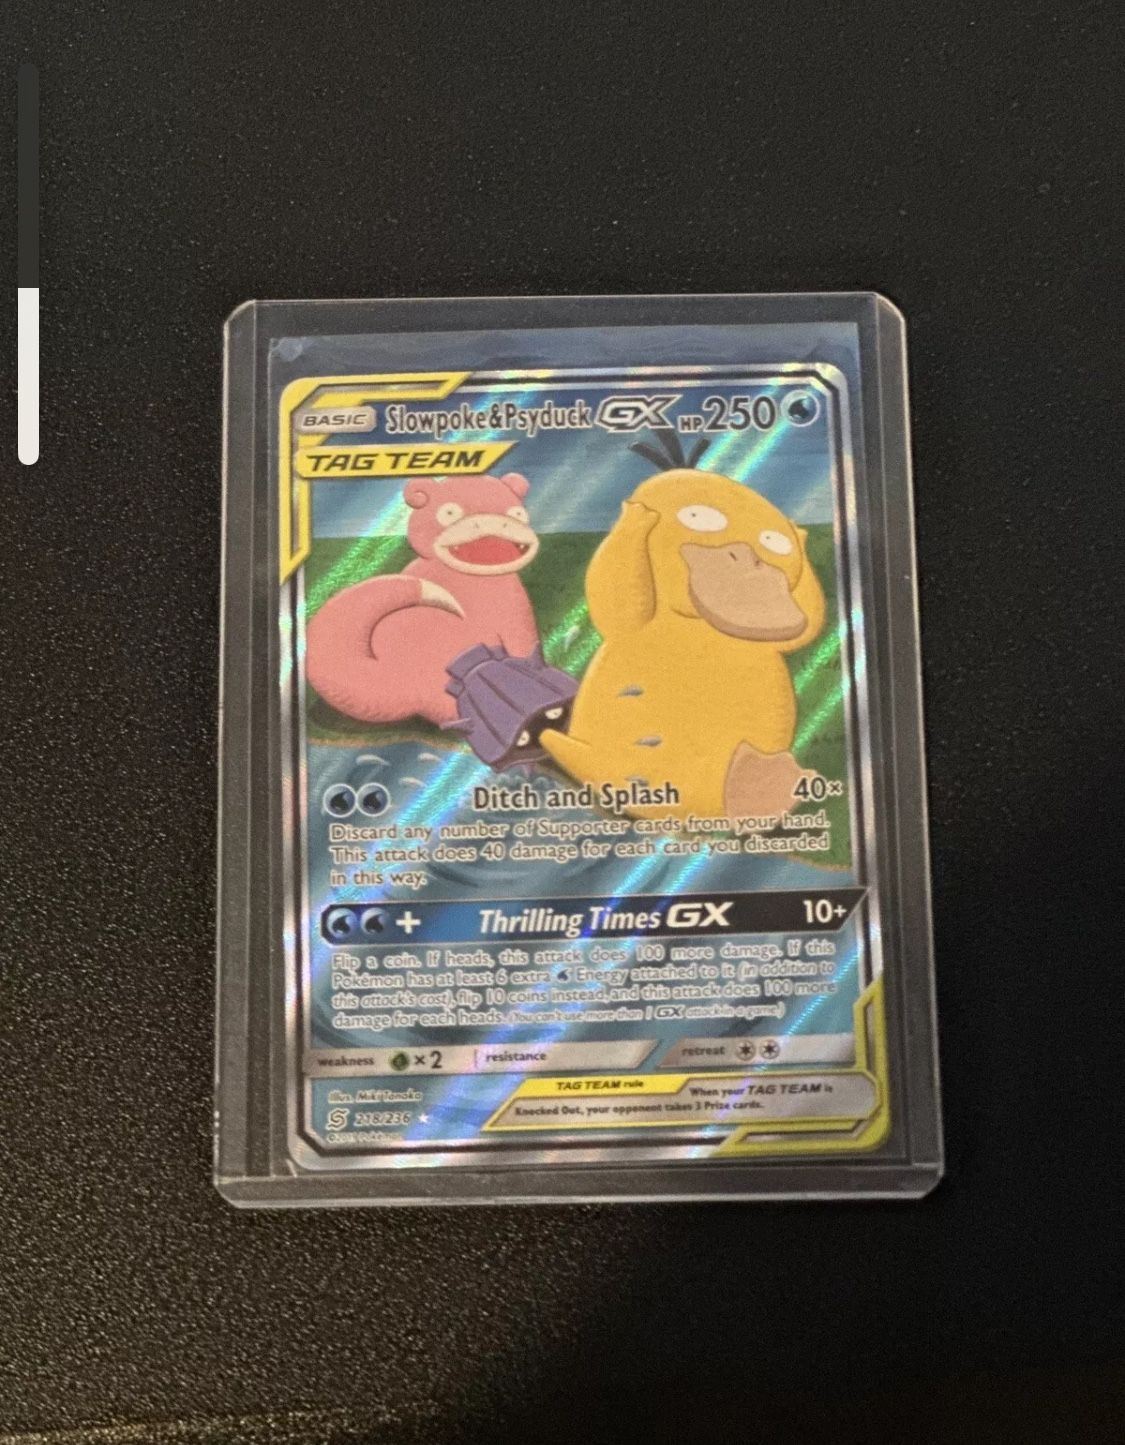 Slowpoke & Psyduck GX Pokemon Card